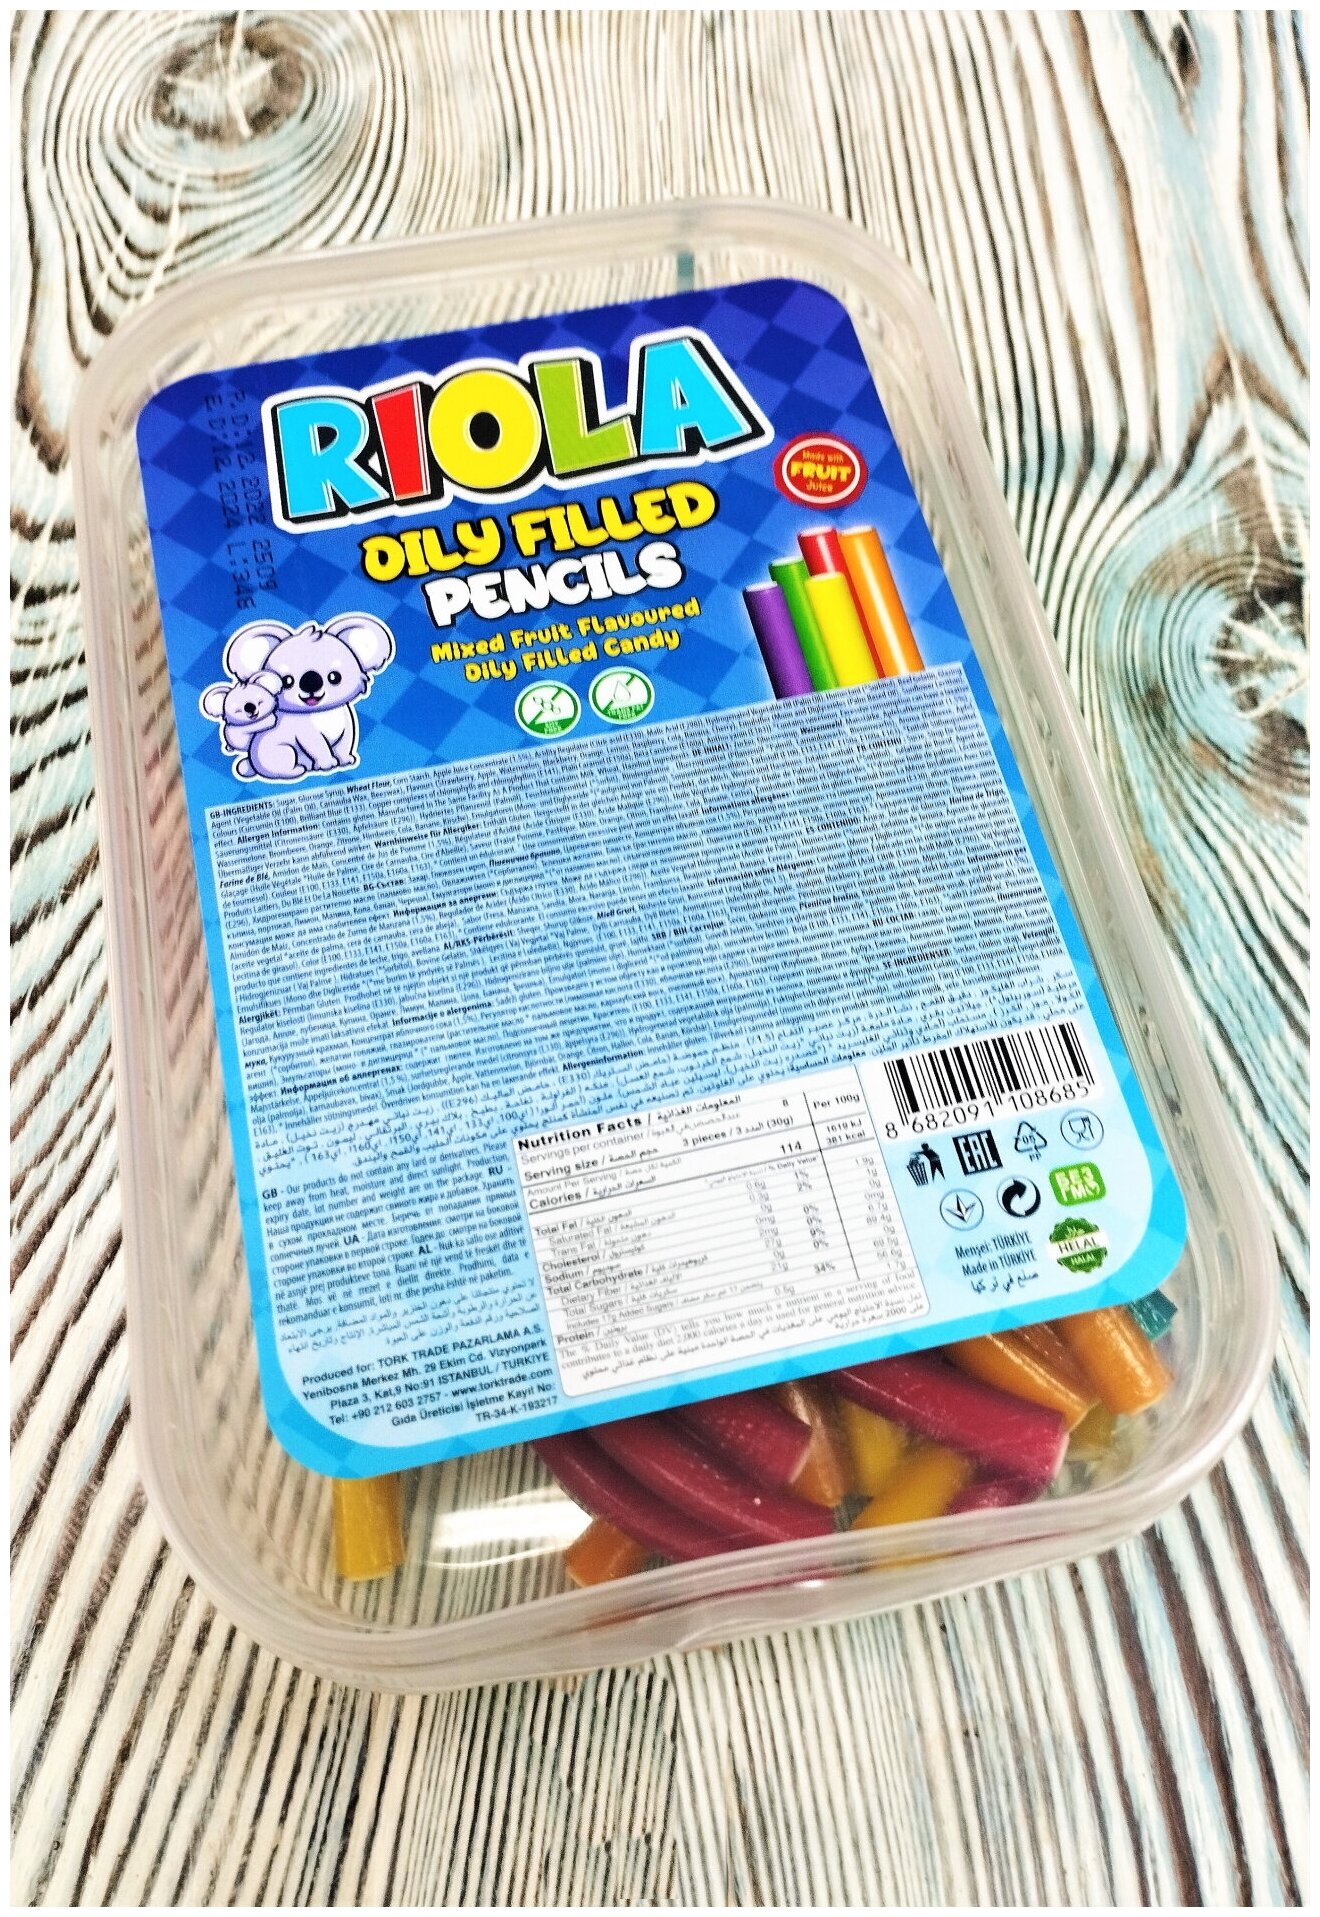 Жевательный мармелад RIOLA oily filled pencils , 250 грамм - фотография № 1